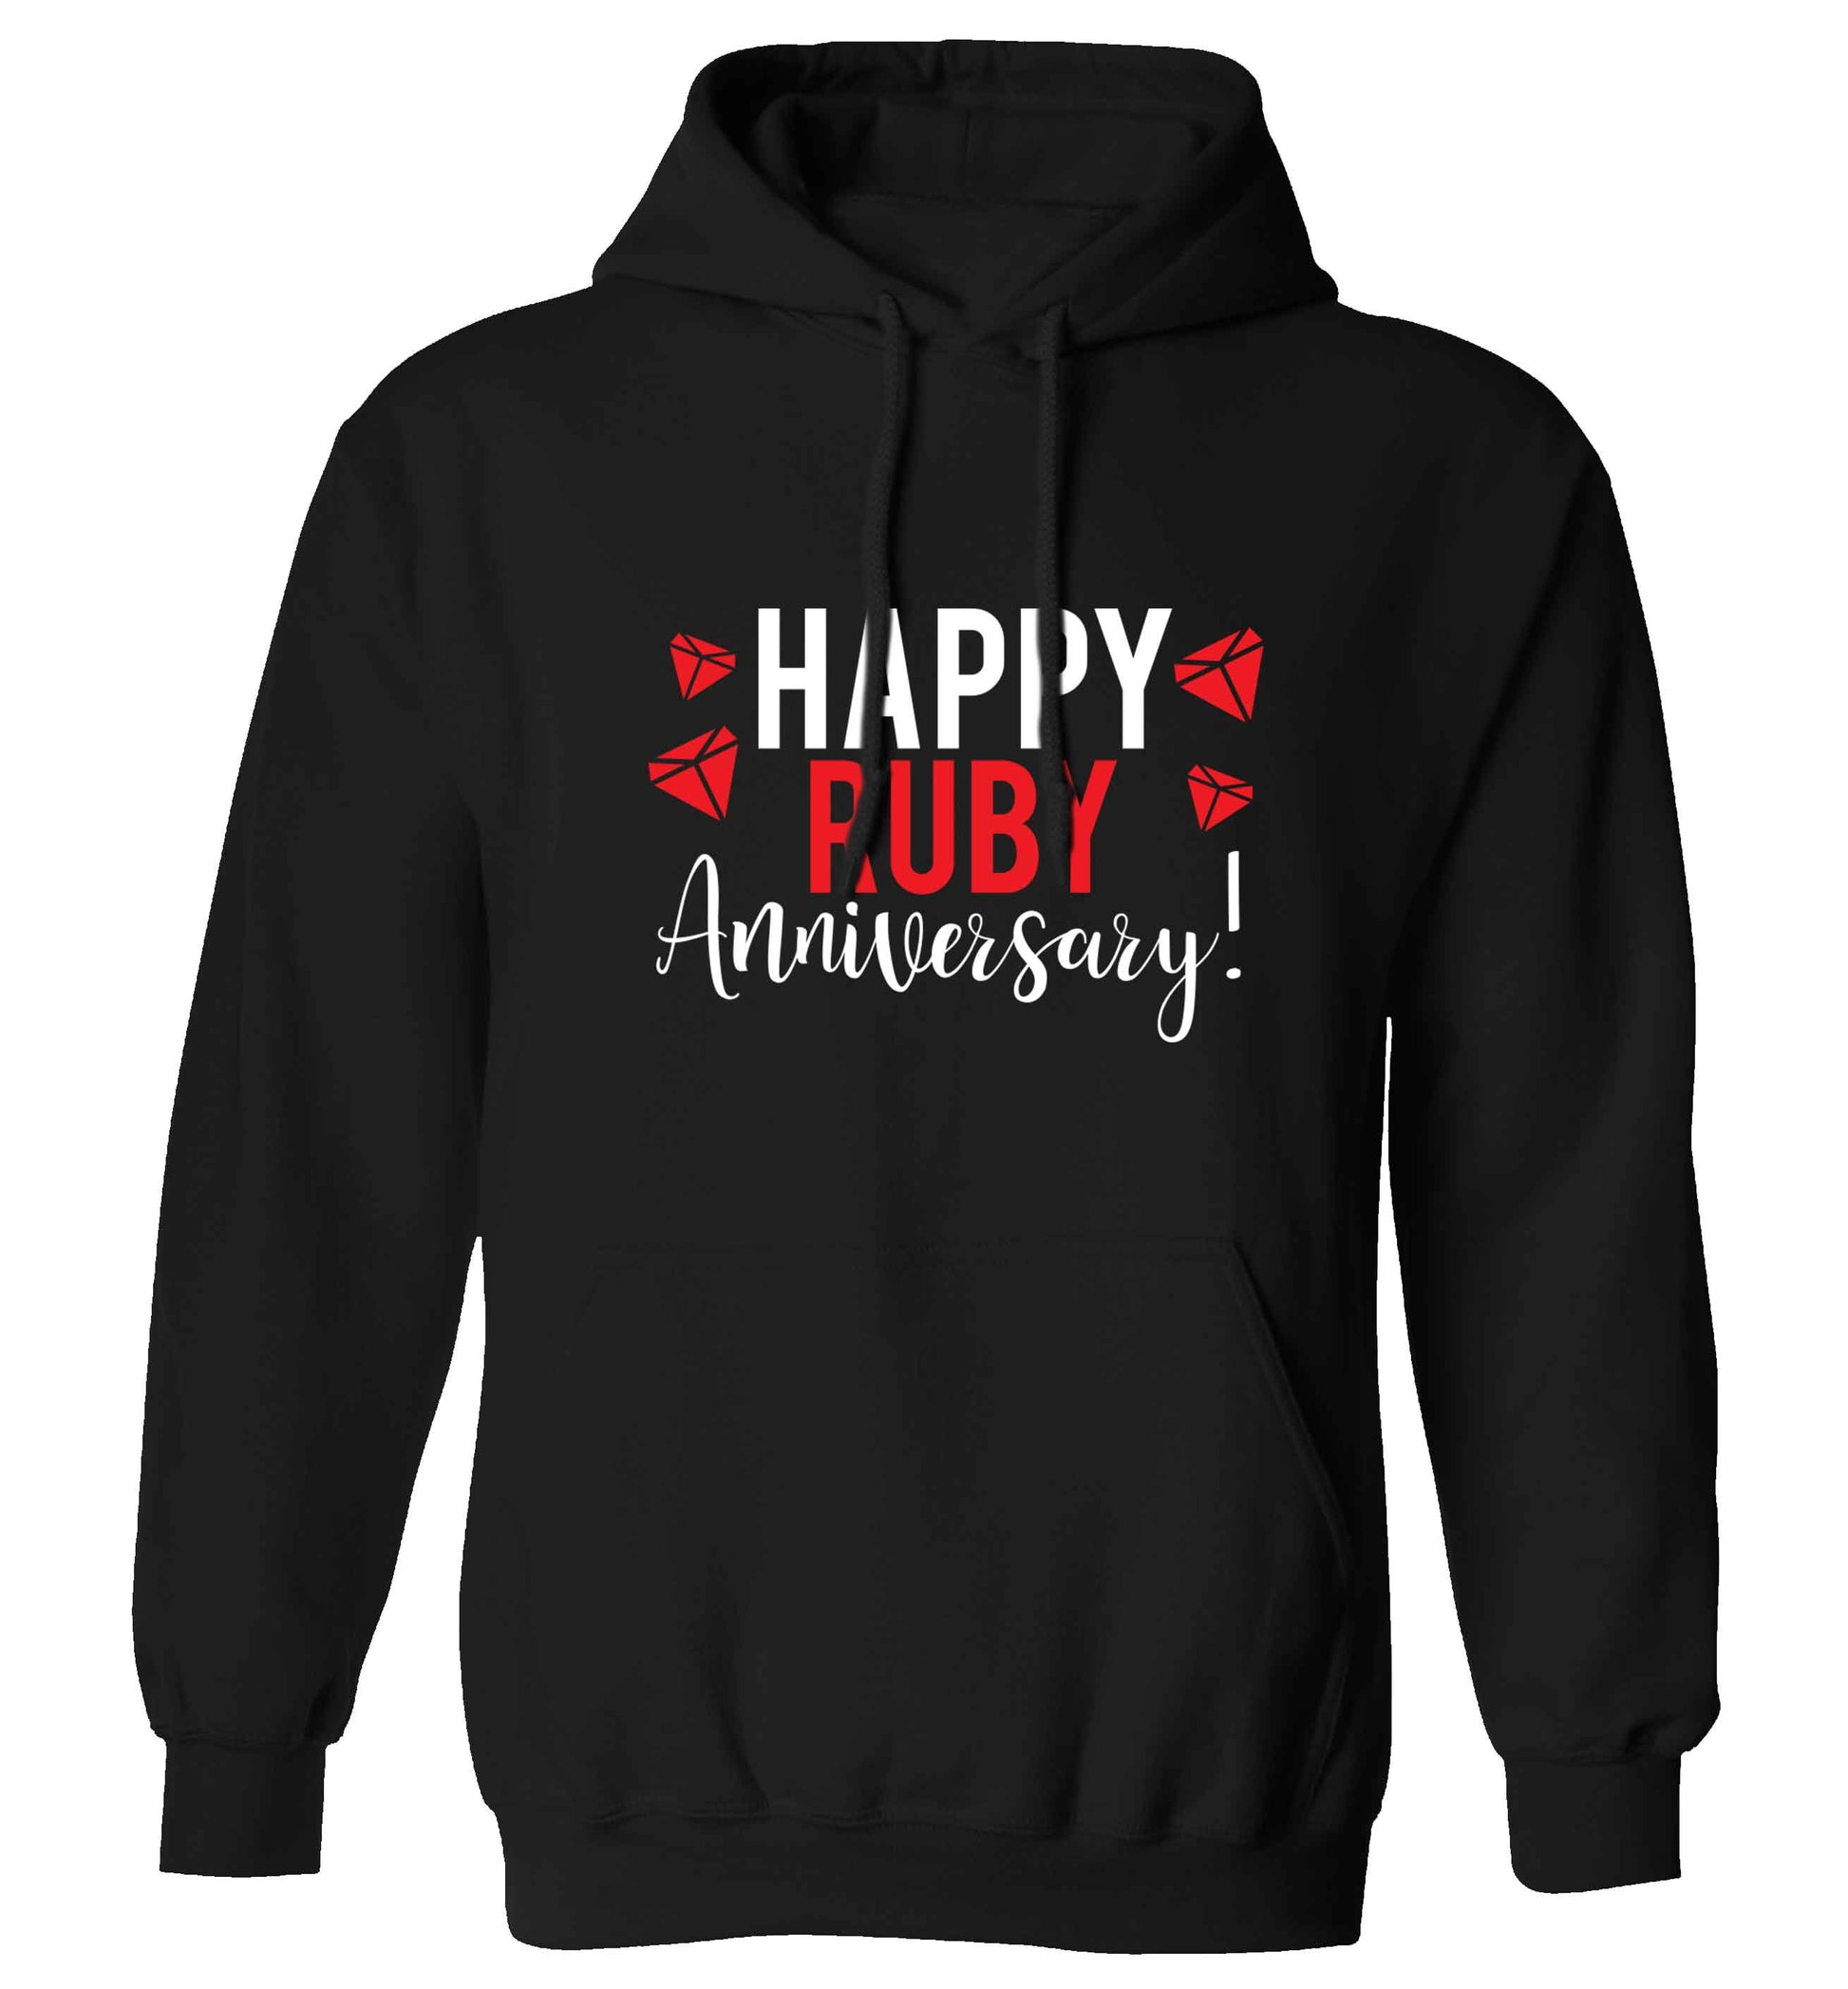 Happy ruby anniversary! adults unisex black hoodie 2XL